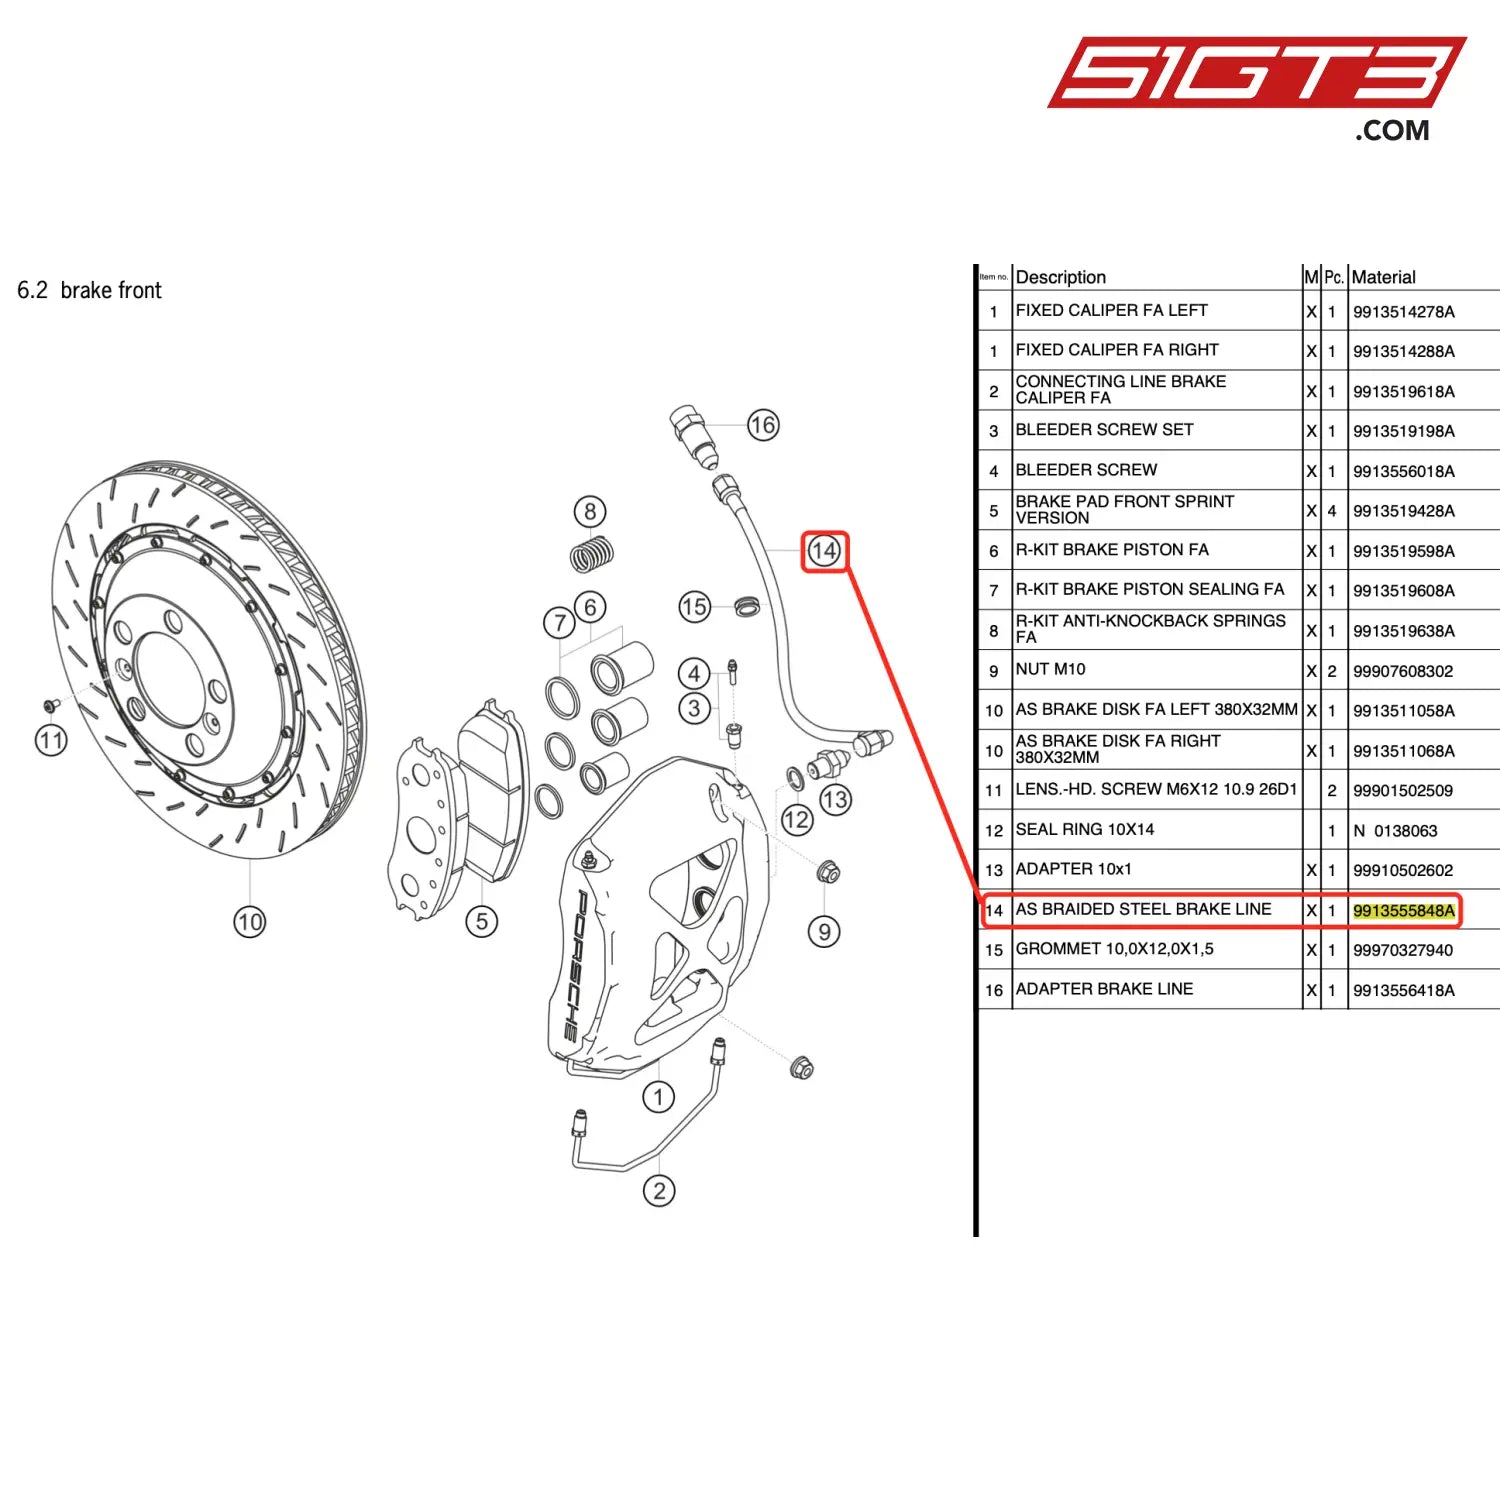 As Braided Steel Brake Line - 9913555848A [Porsche 911 Gt3 Cup Type 991 (Gen 2)]